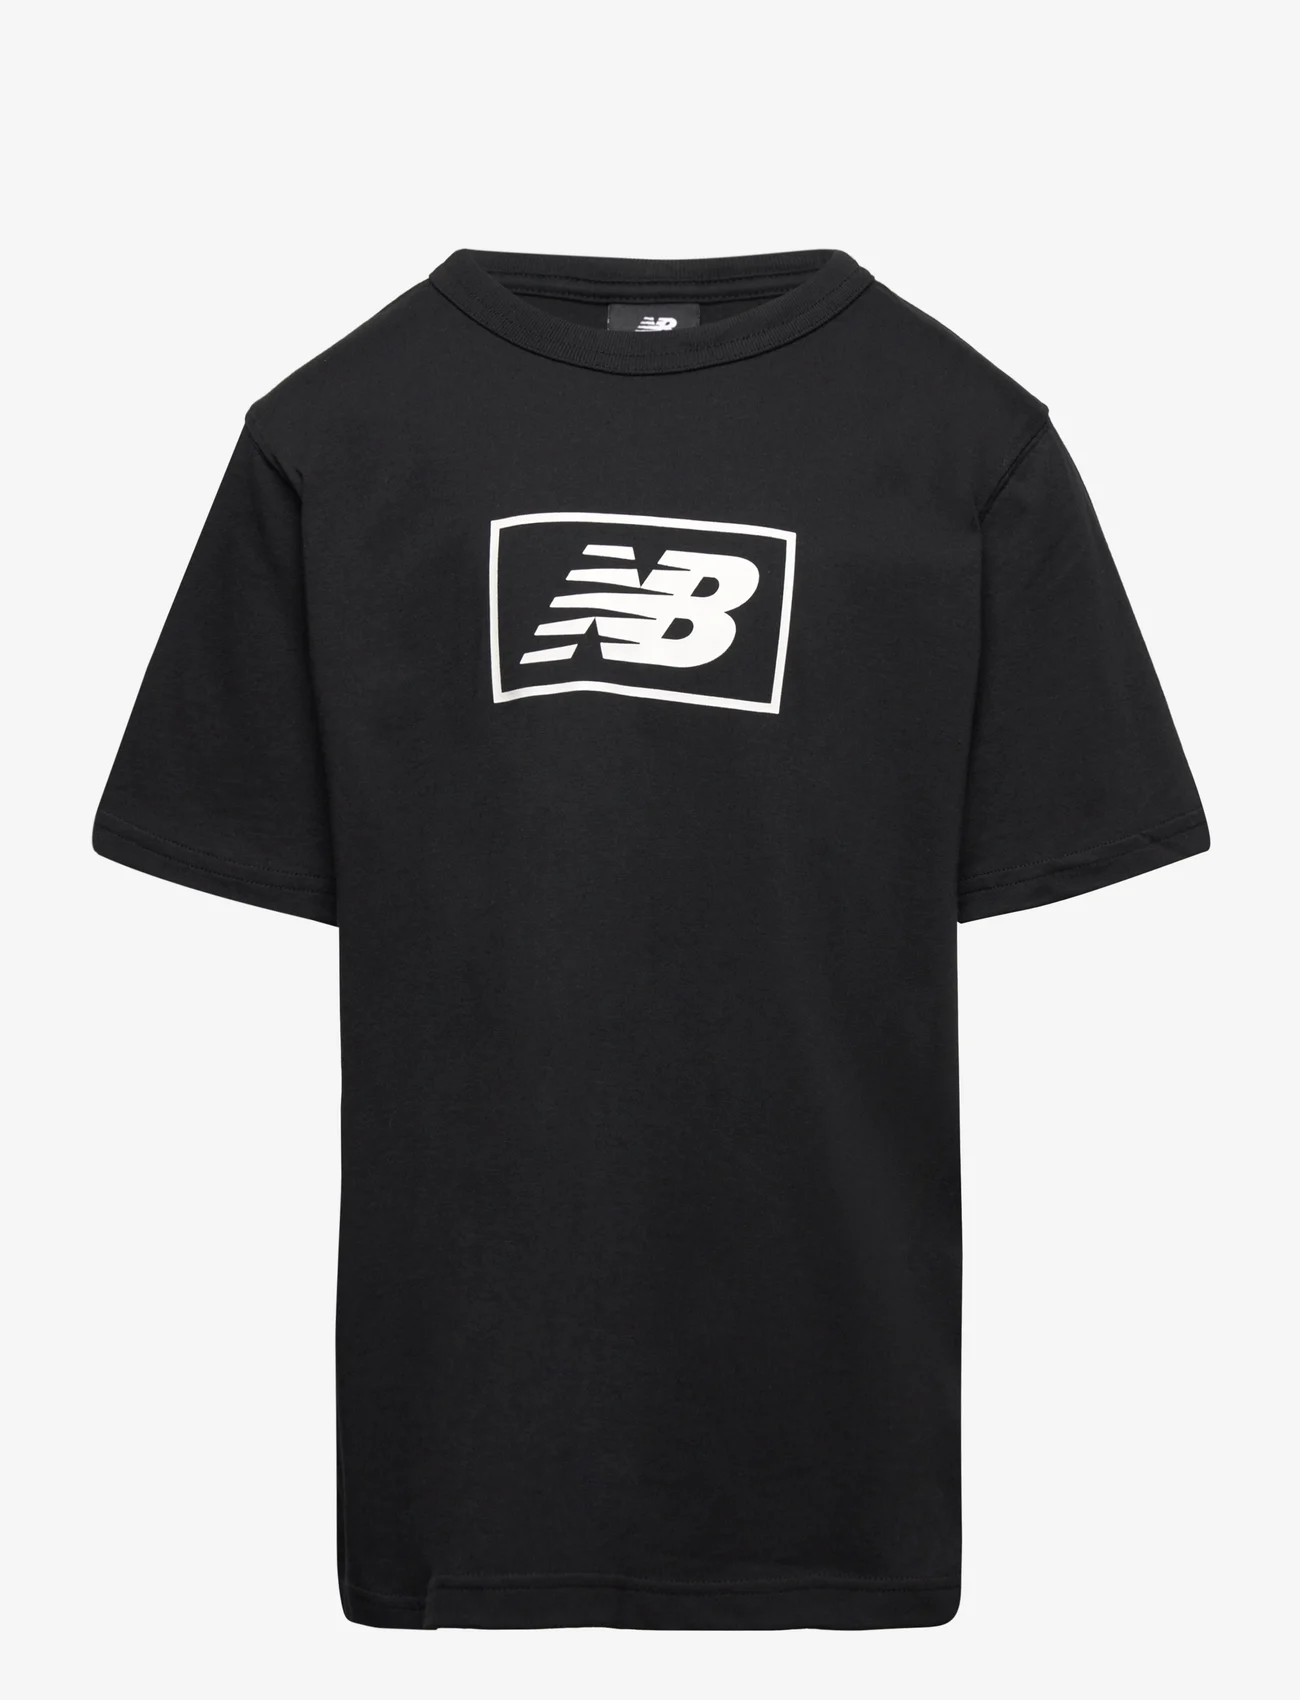 New Balance - NB Essentials Logo Tee - kortærmede t-shirts - black - 0